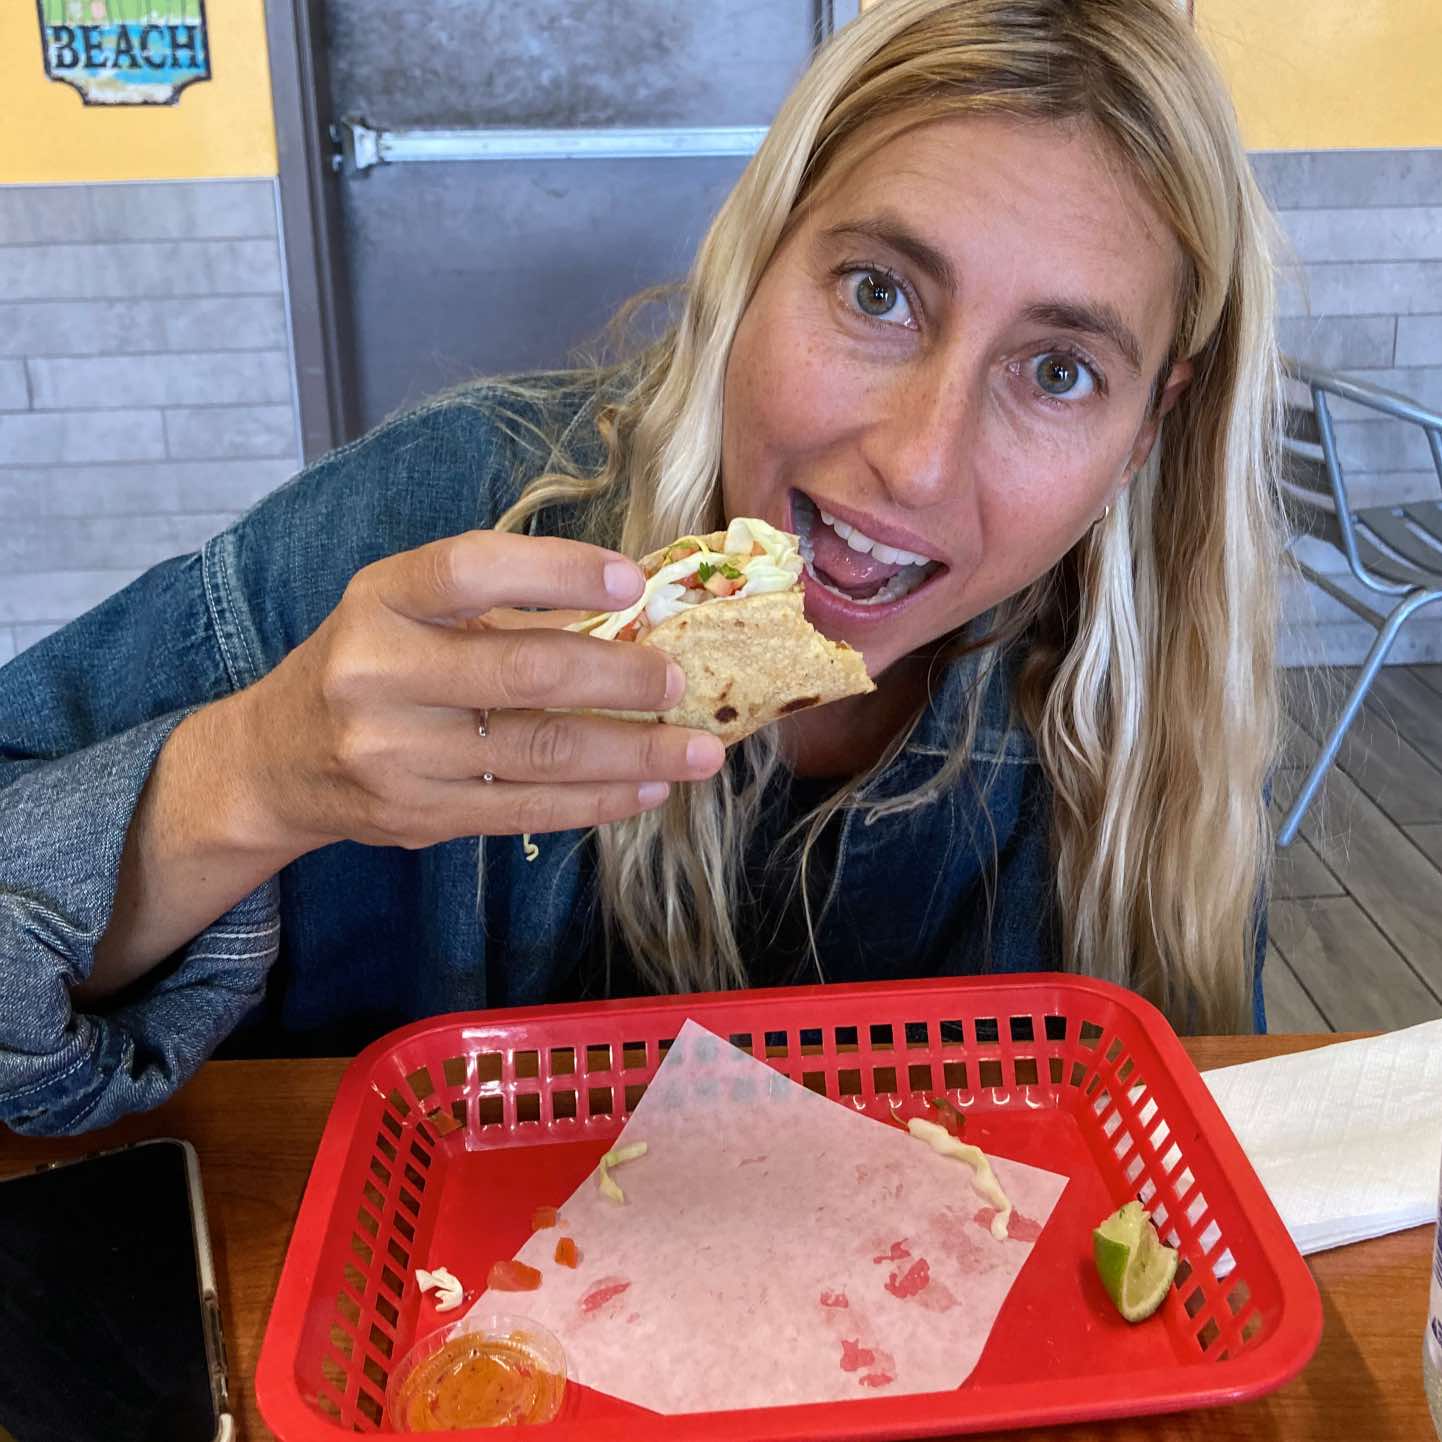 A woman enjoying a taco at a restaurant